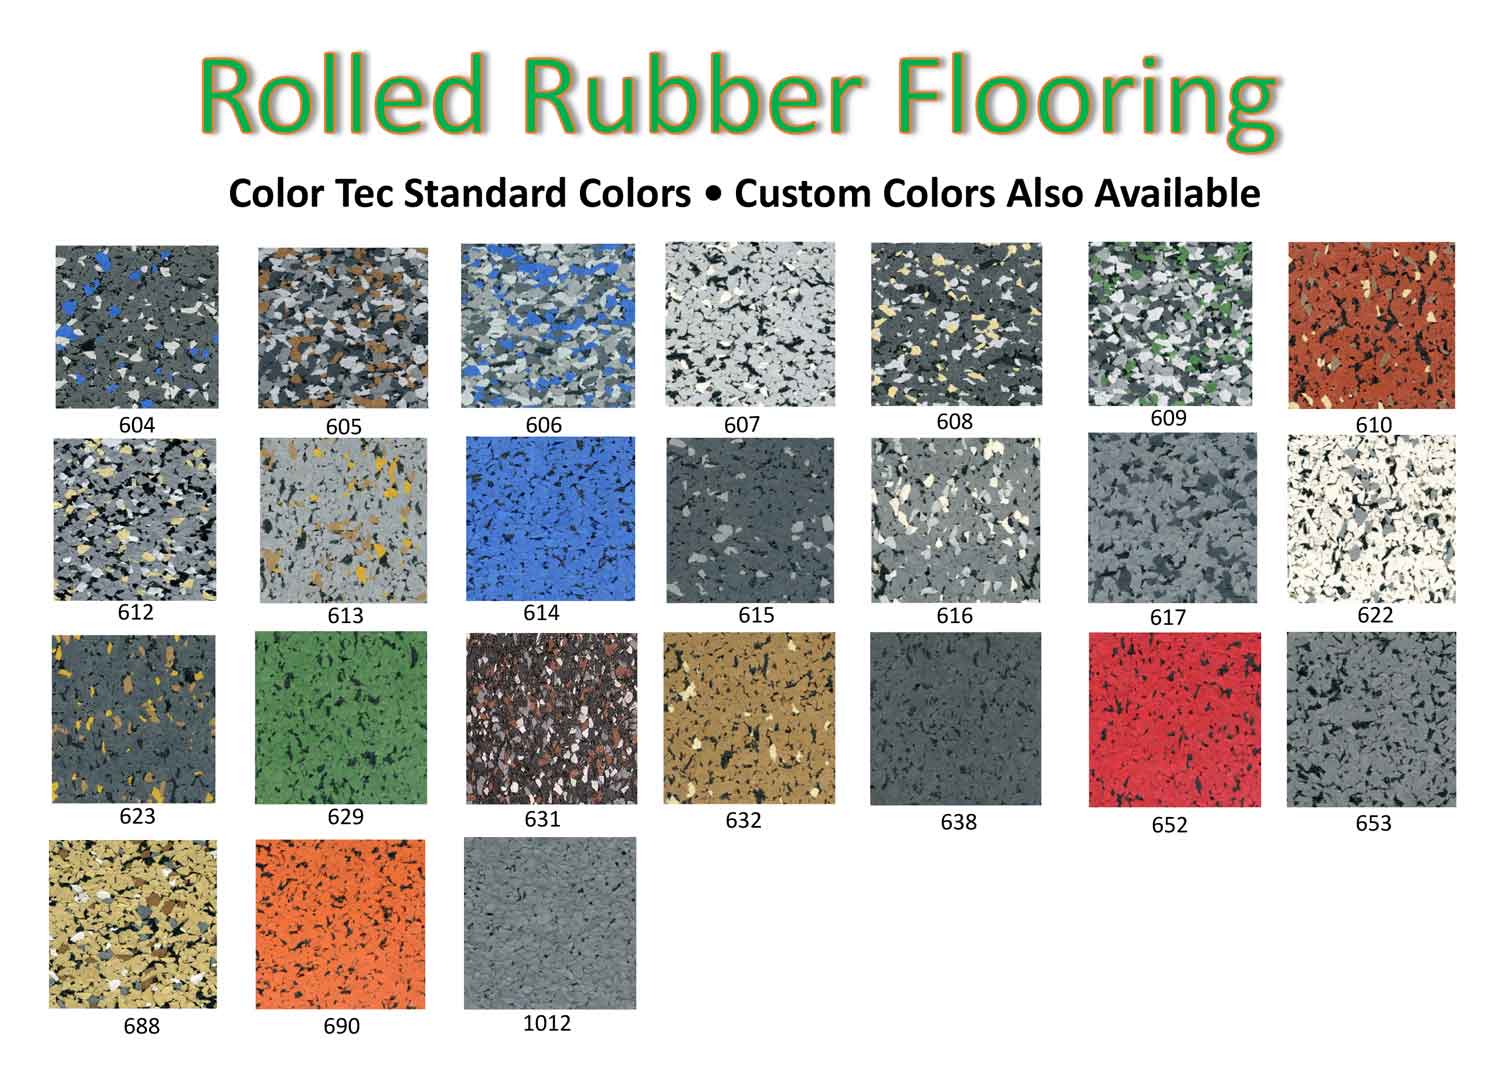 rolled-rubber-color-tec-brochure-1